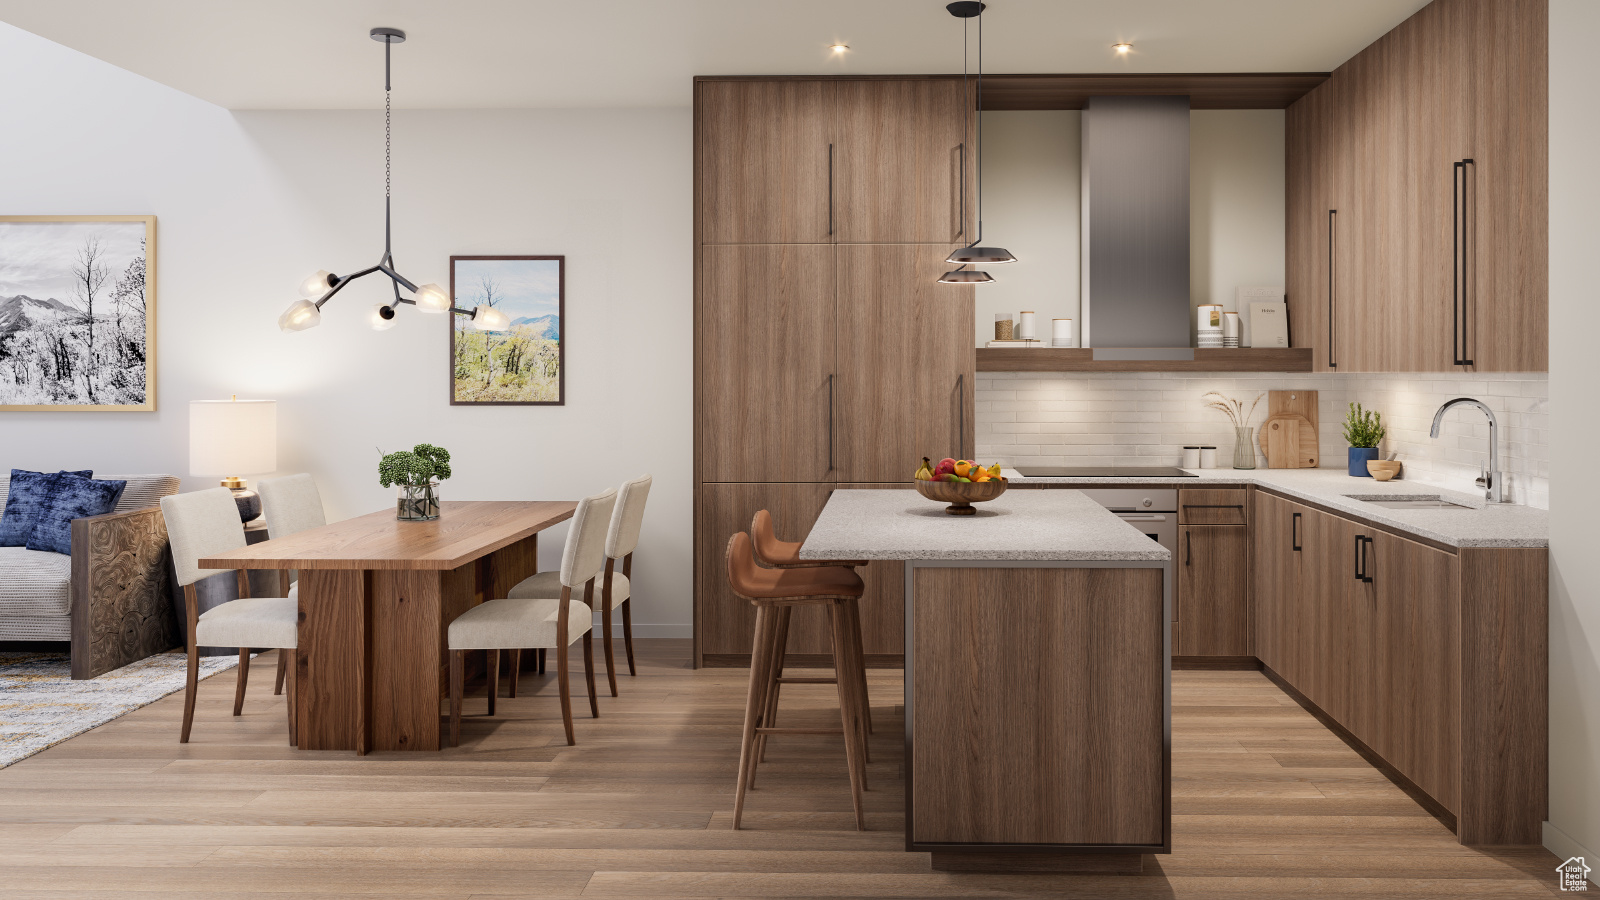 Kitchen featuring a breakfast bar, pendant lighting, light hardwood / wood-style flooring, and a center island